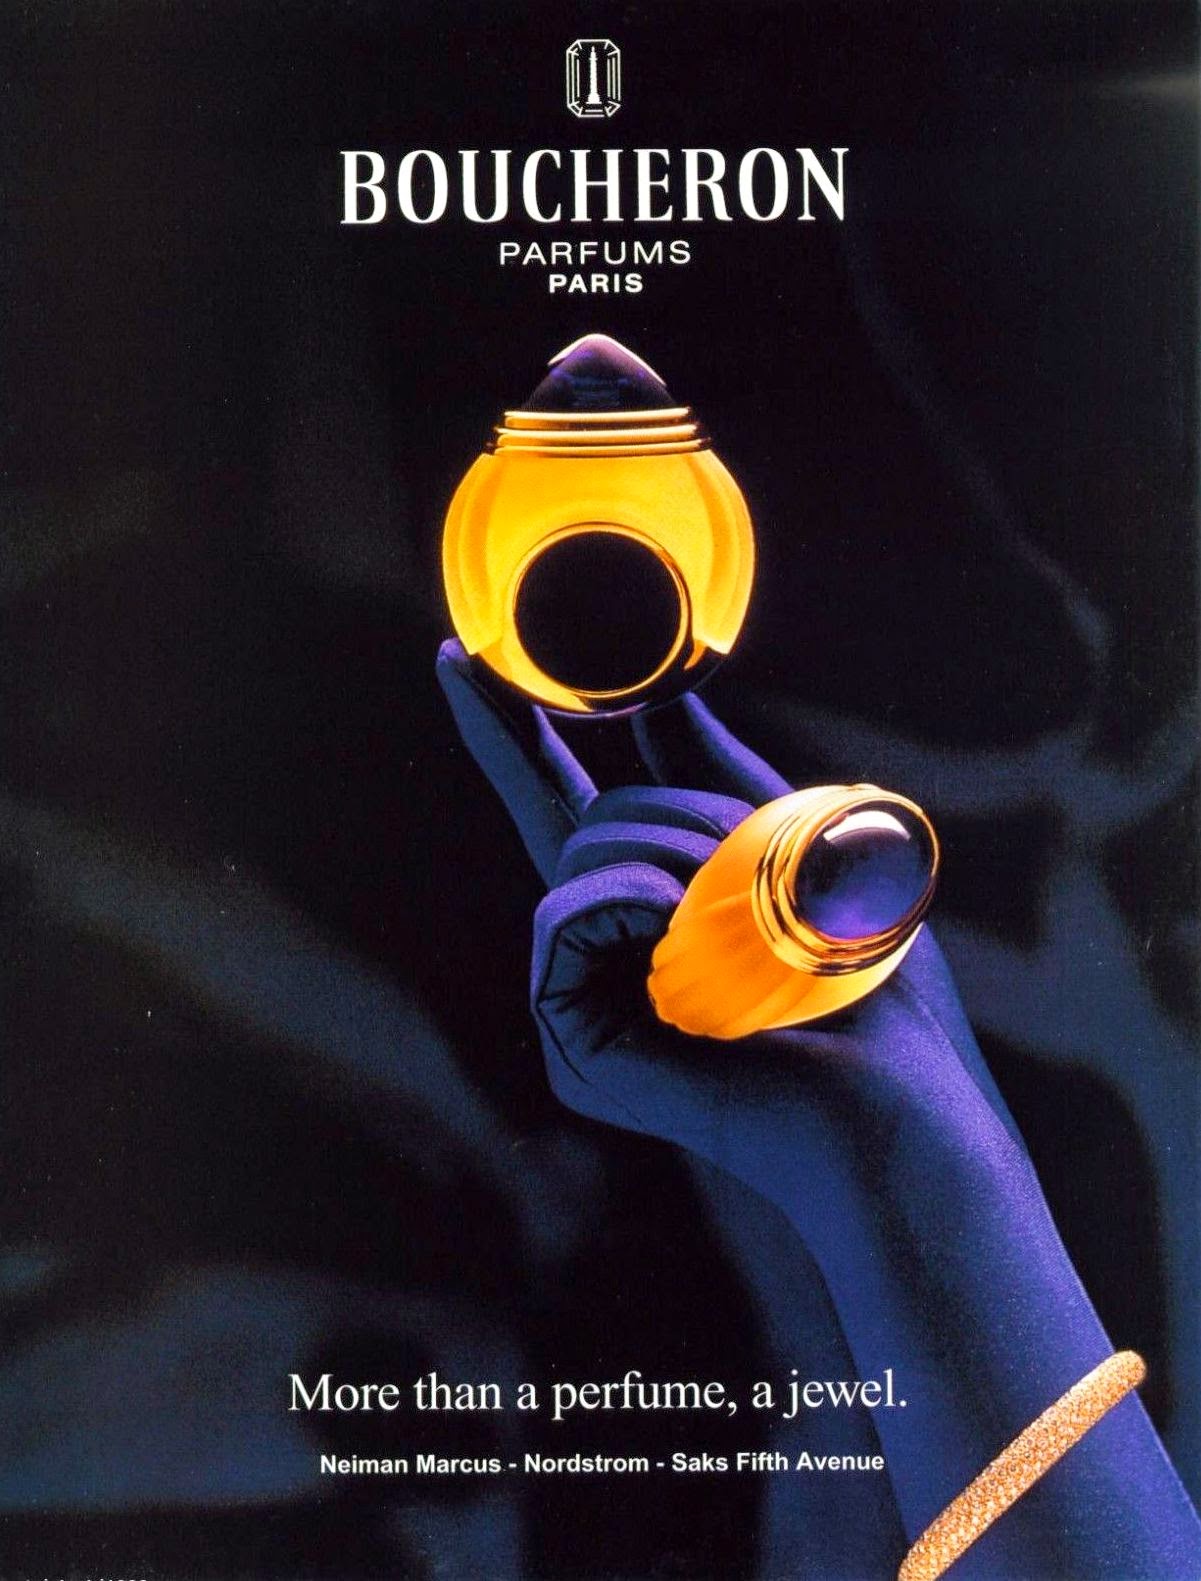 Cleopatra's Boudoir: Boucheron by Boucheron c1988